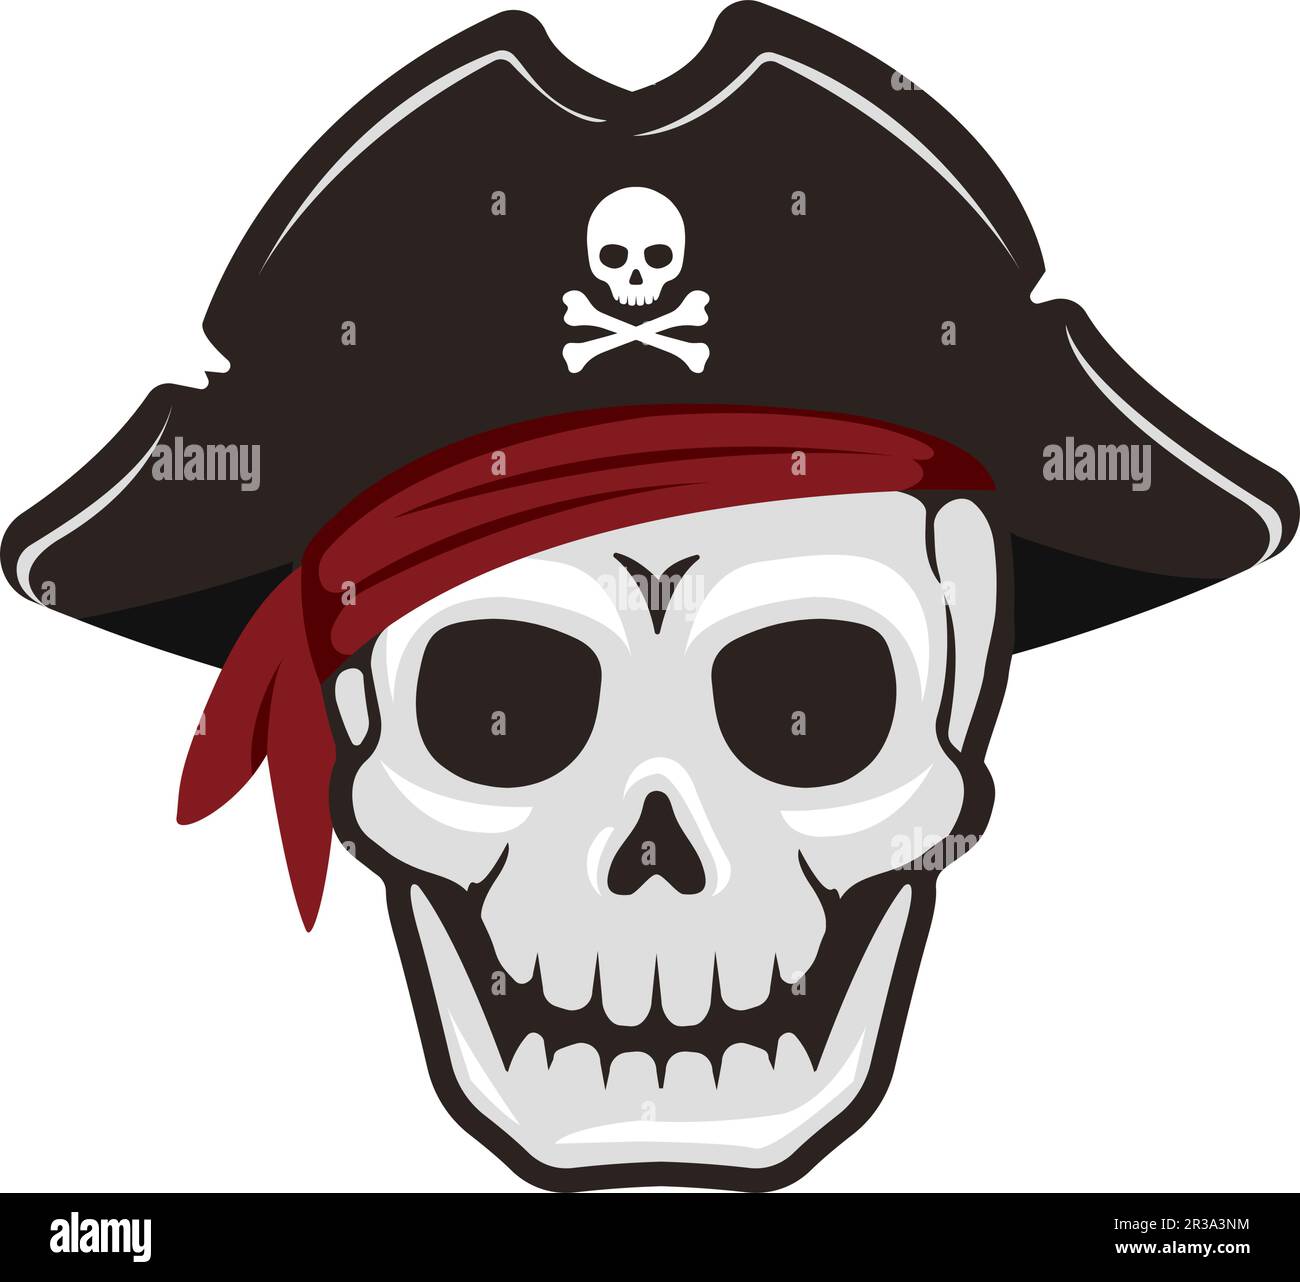 Pirates skull head vector illustration Stock Vector Image & Art - Alamy